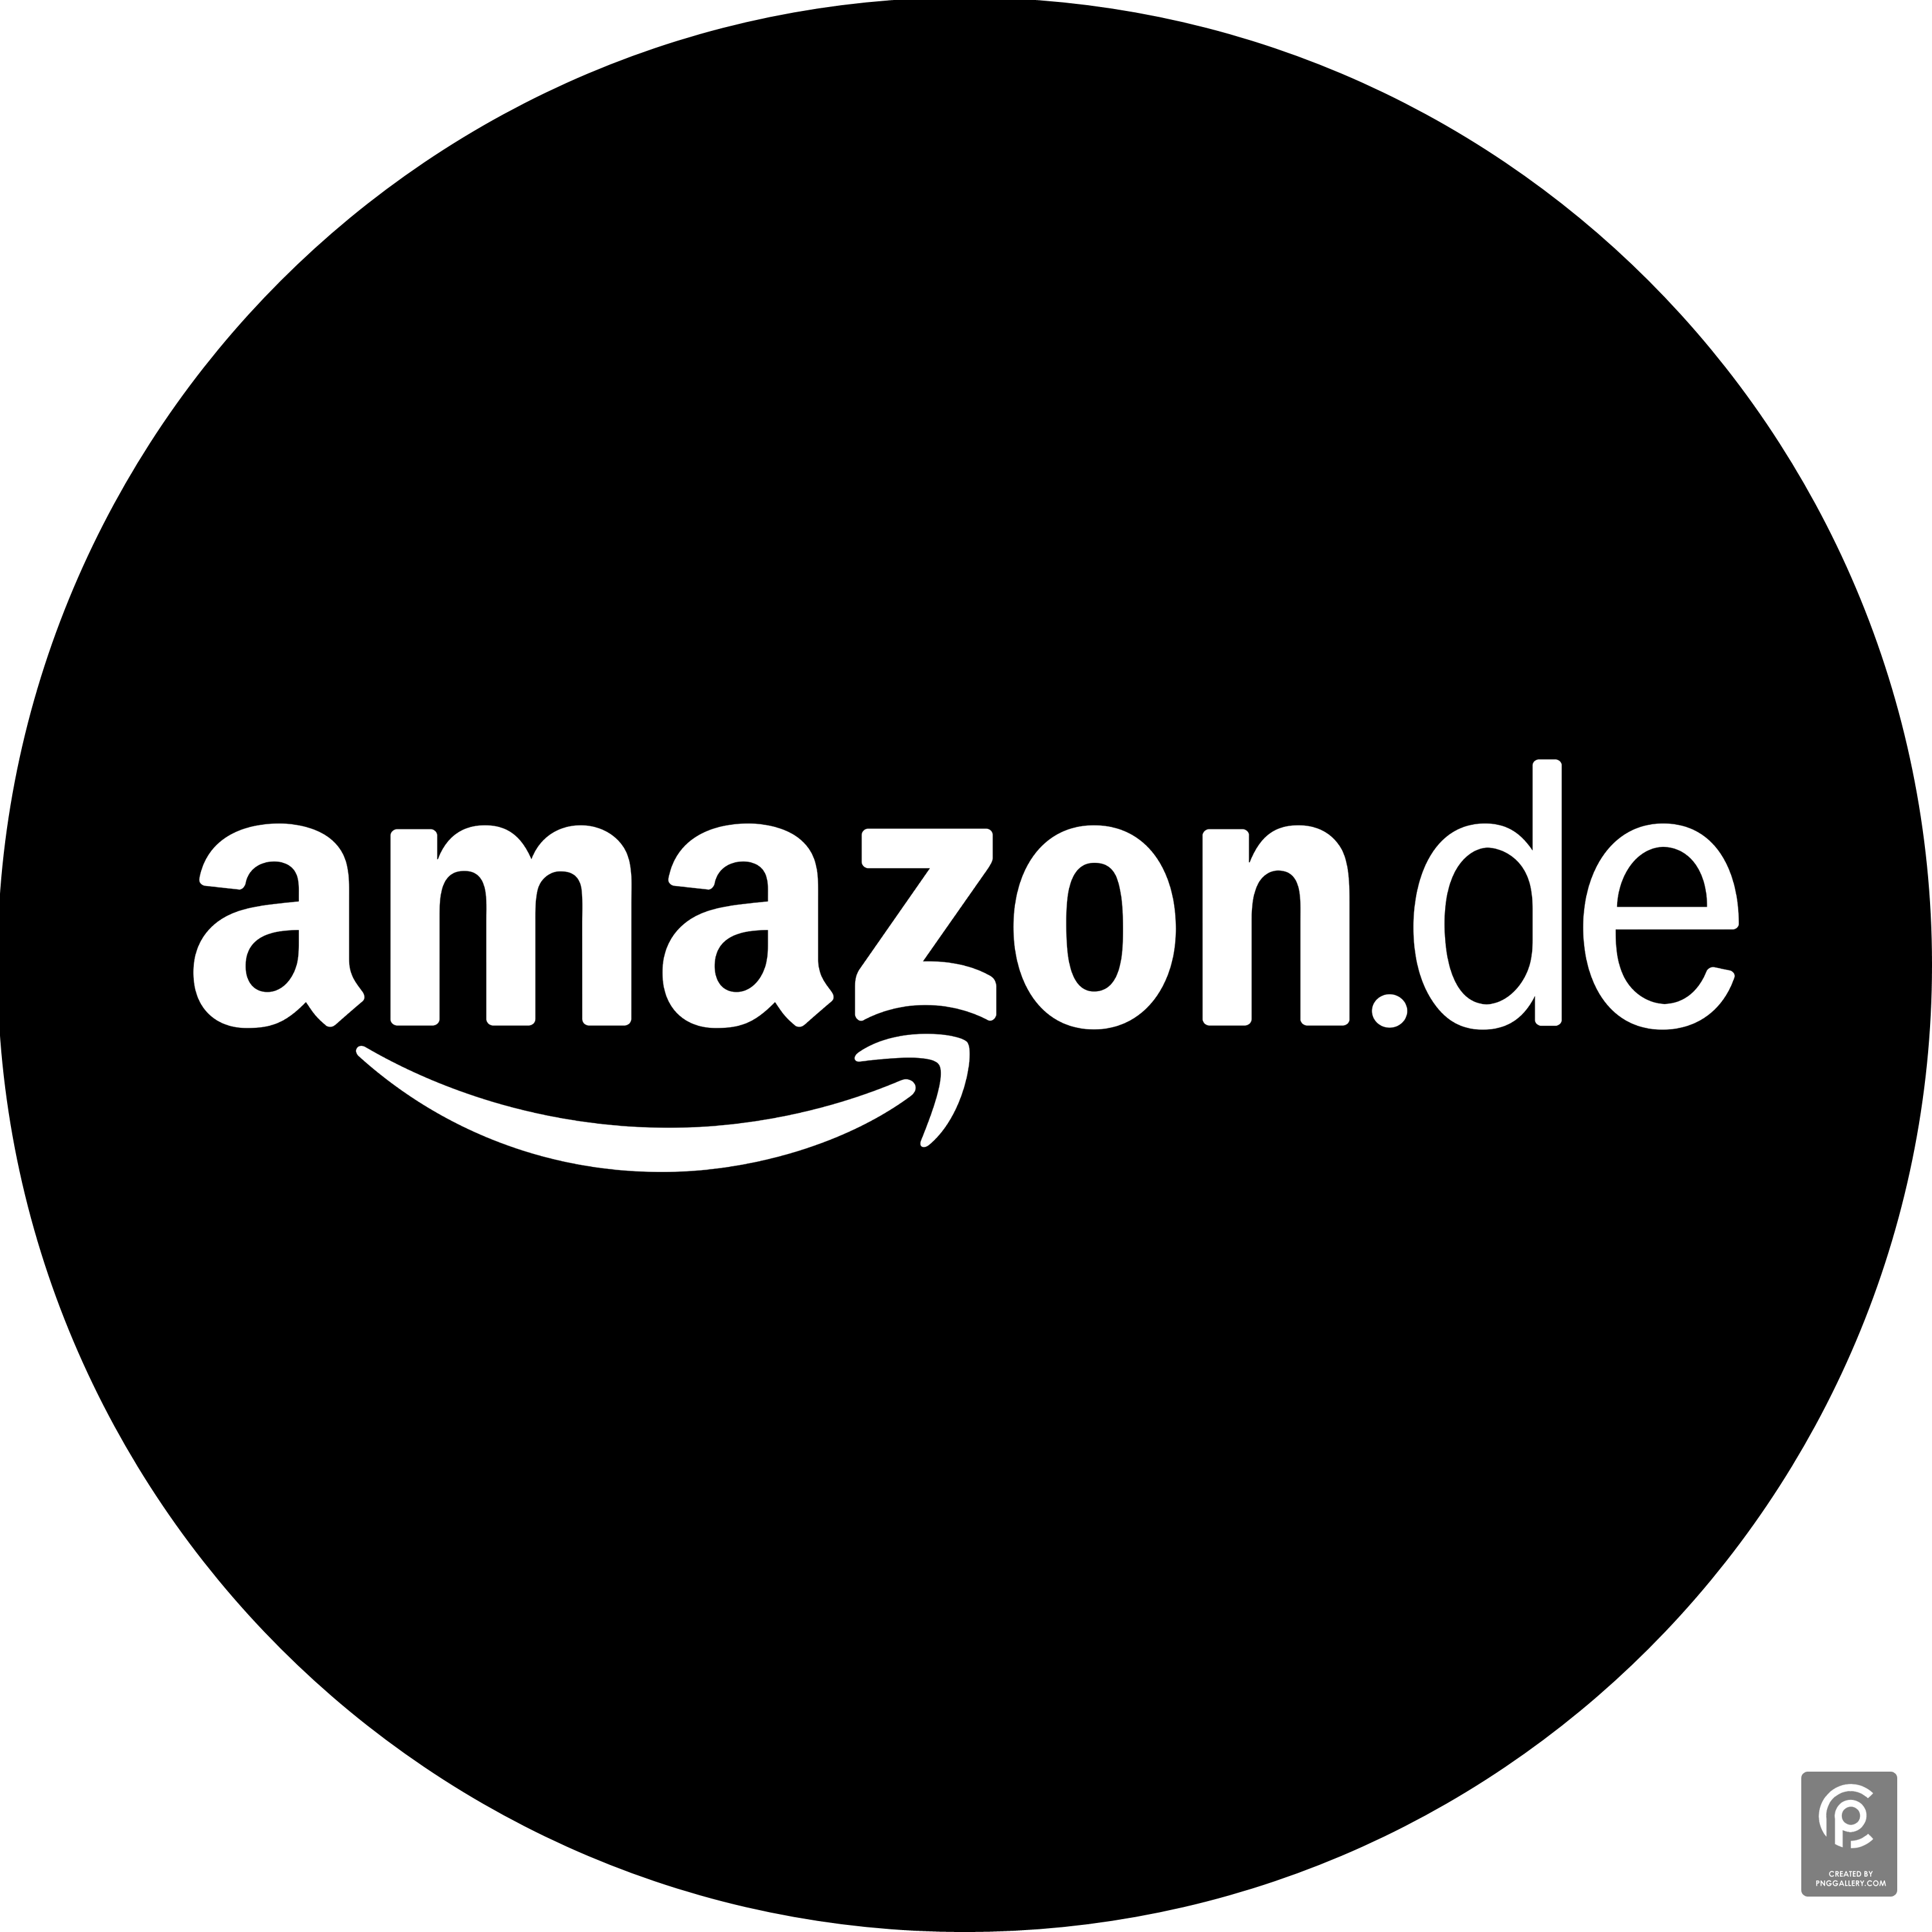 Amazon.de Logo Transparent Gallery